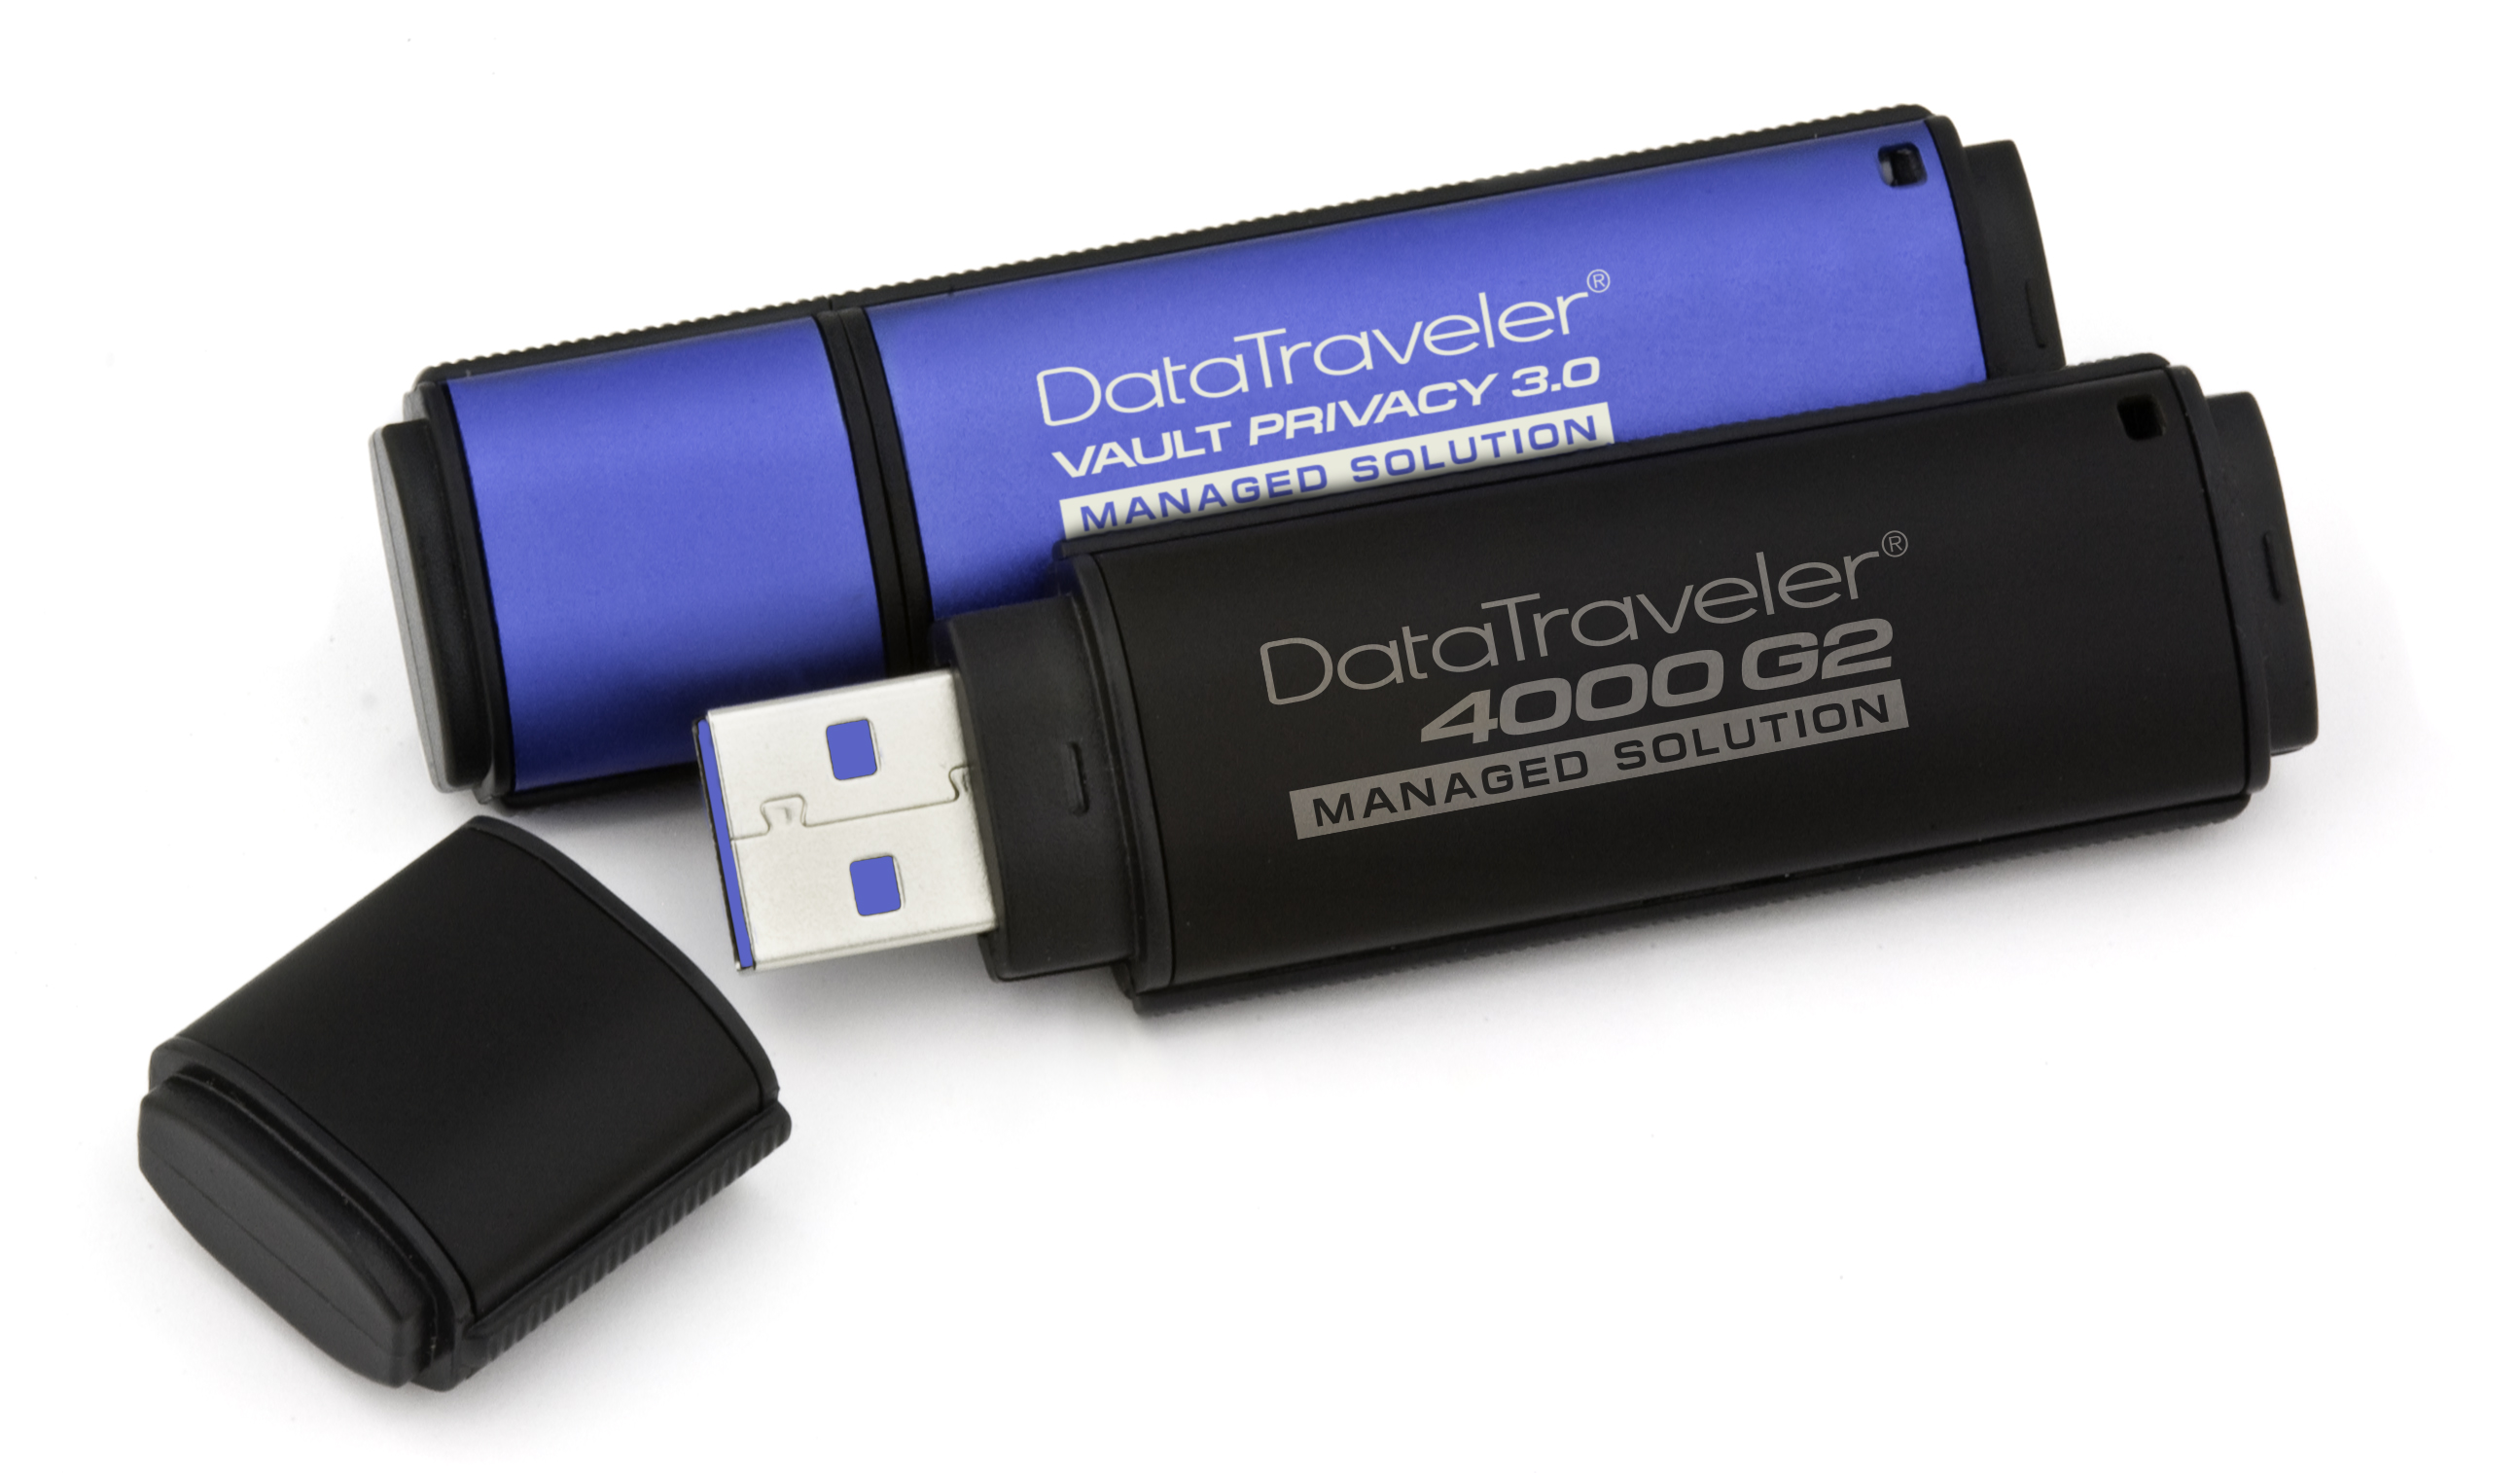 DataTraveler 4000G2 and DataTraveler Vault Privacy Managed Solution_DTVP...